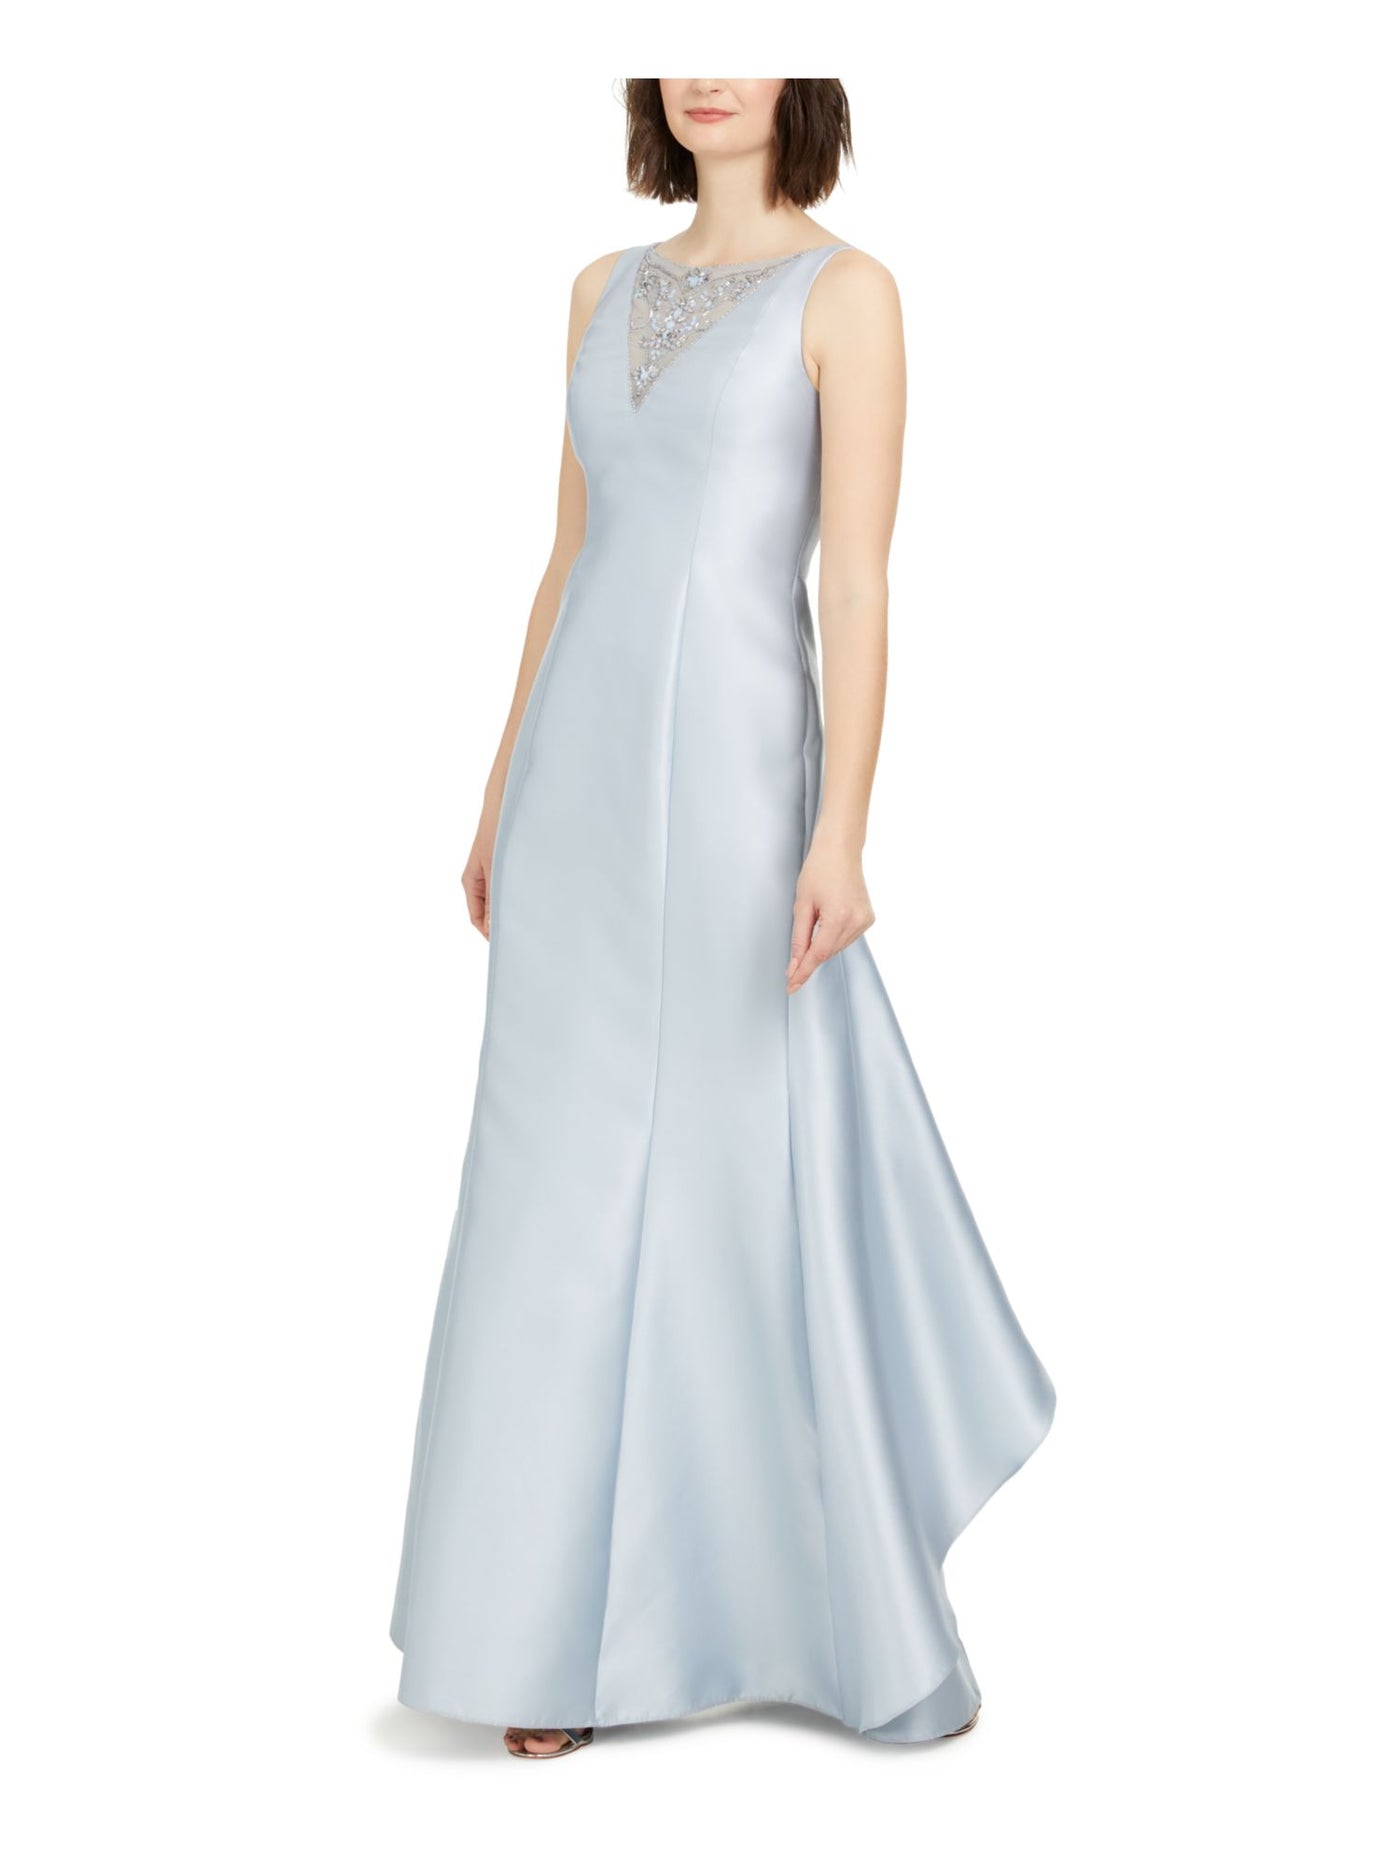 ADRIANNA PAPELL Womens Light Blue Embellished Ruffled Satin Sleeveless Illusion Neckline Full-Length Formal A-Line Dress 4